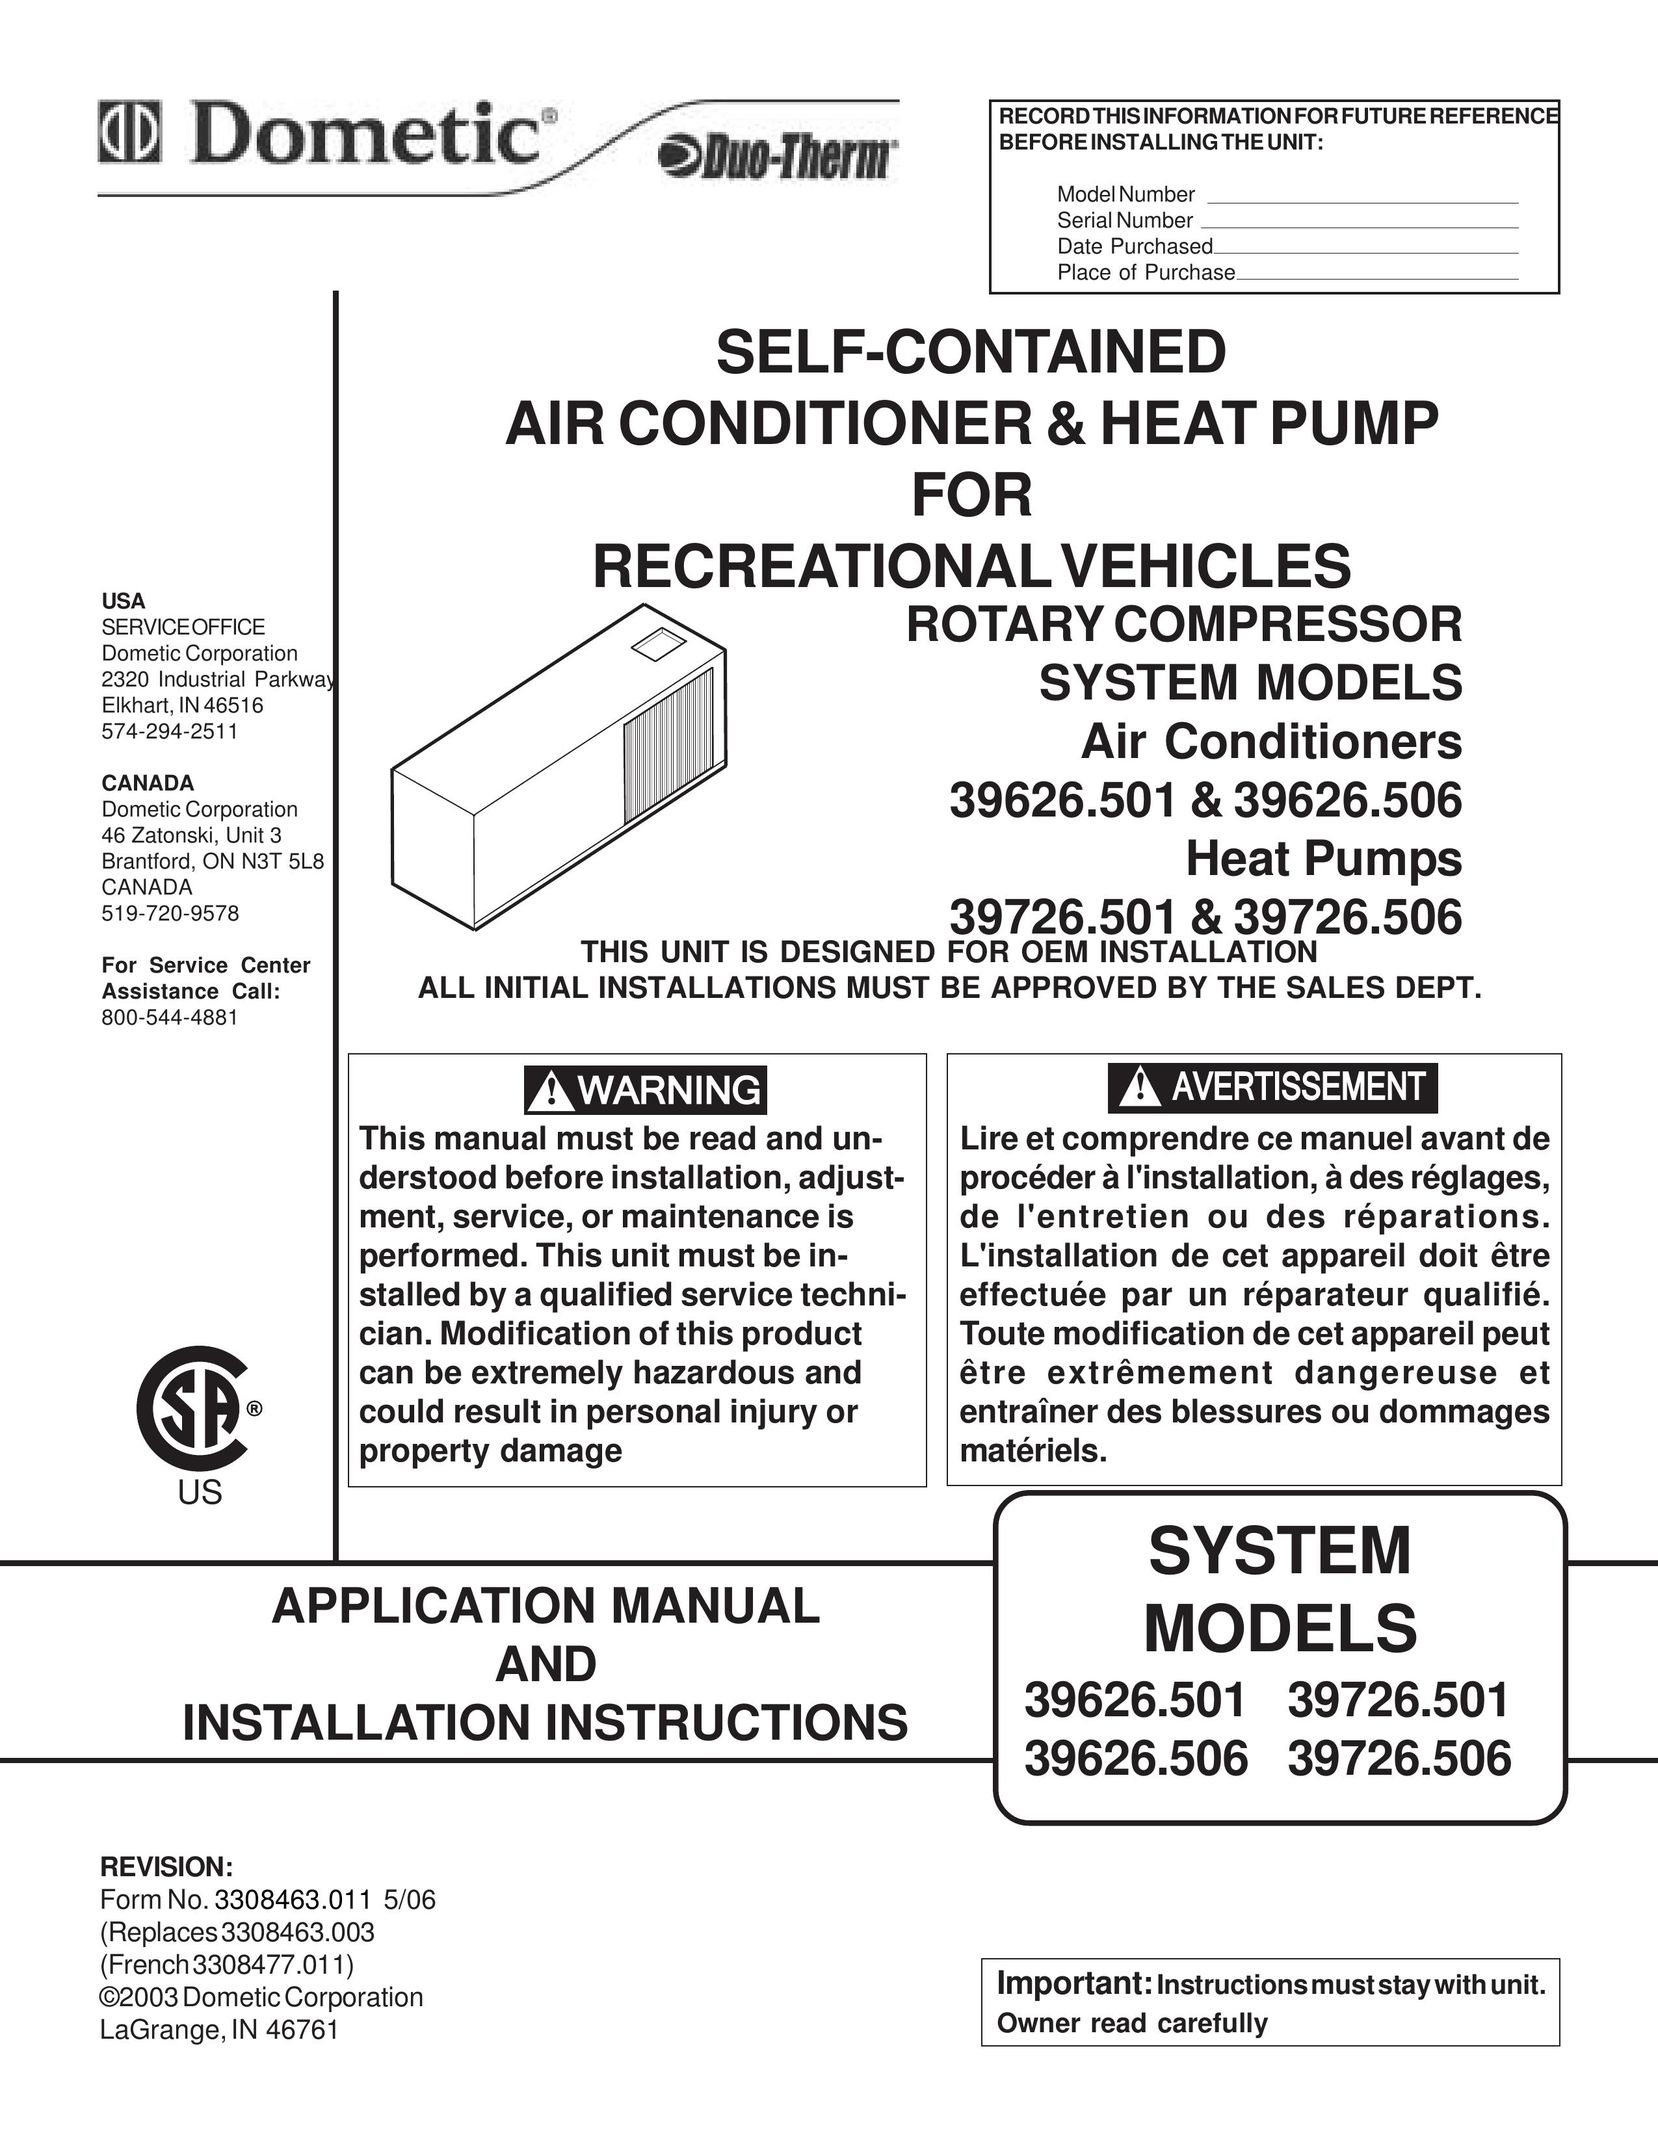 Dometic 39726.506 Air Conditioner User Manual